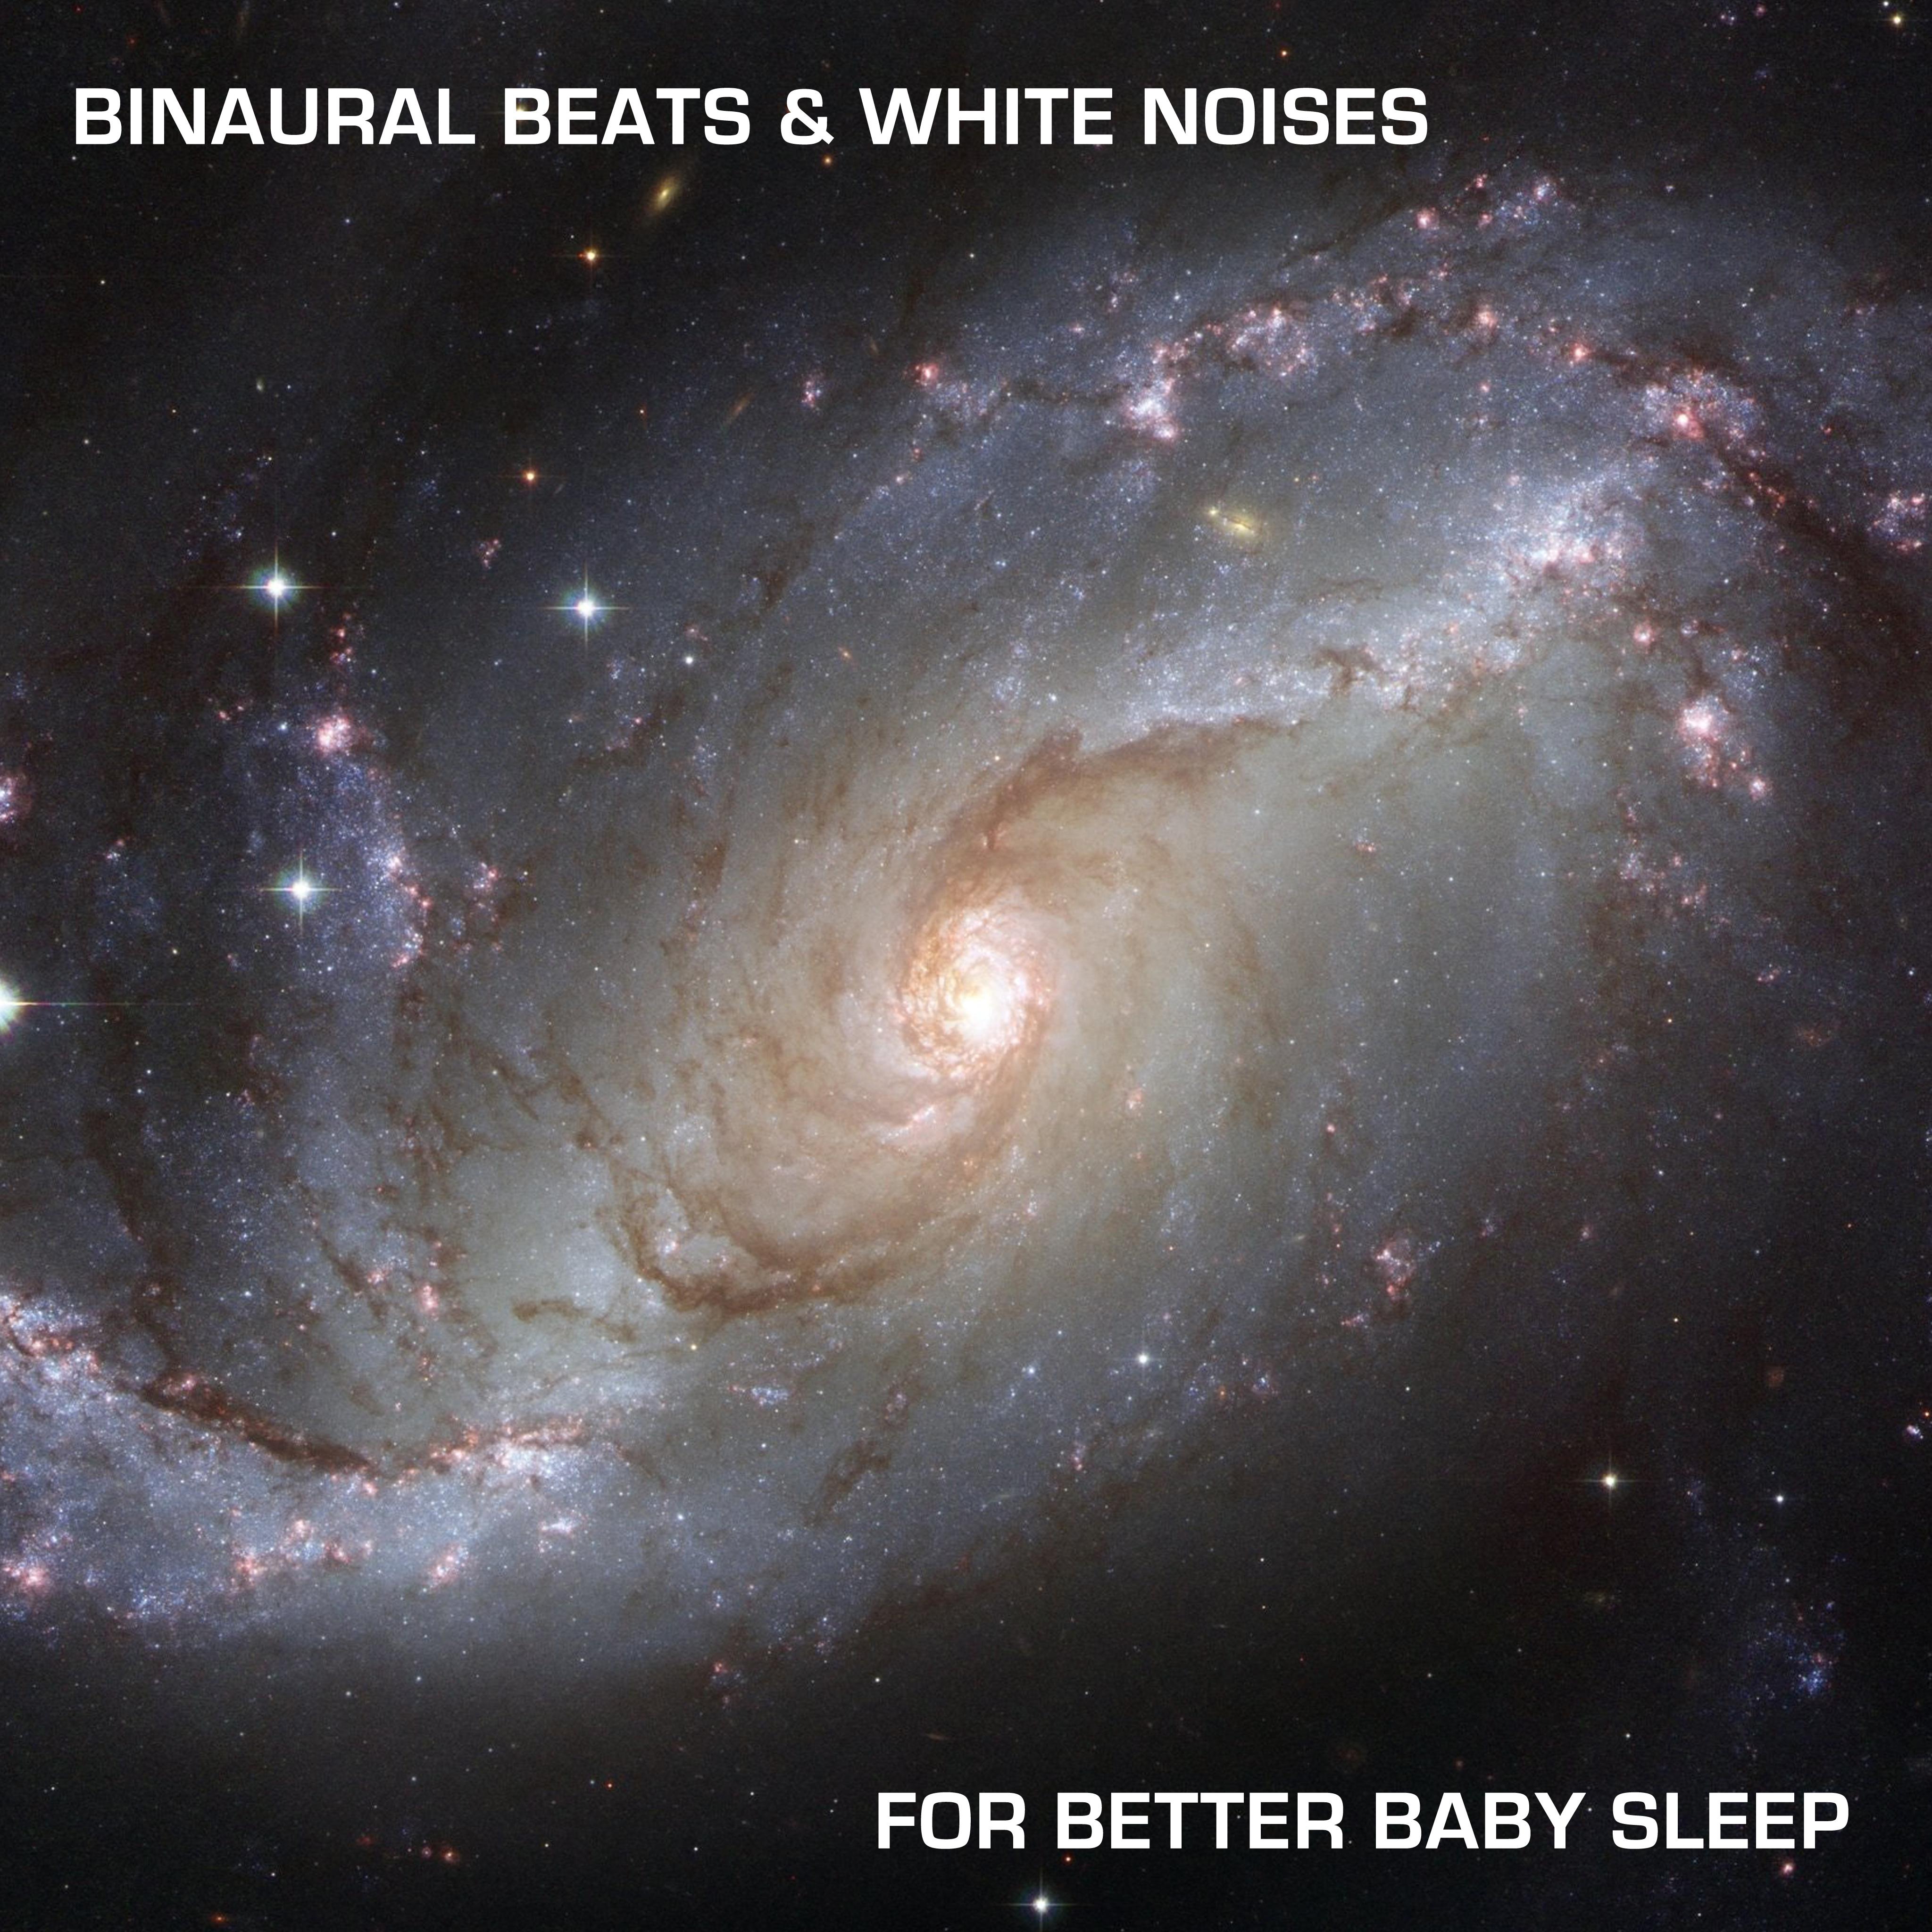 10 Binaural Beats & White Noises for Better Baby Sleep